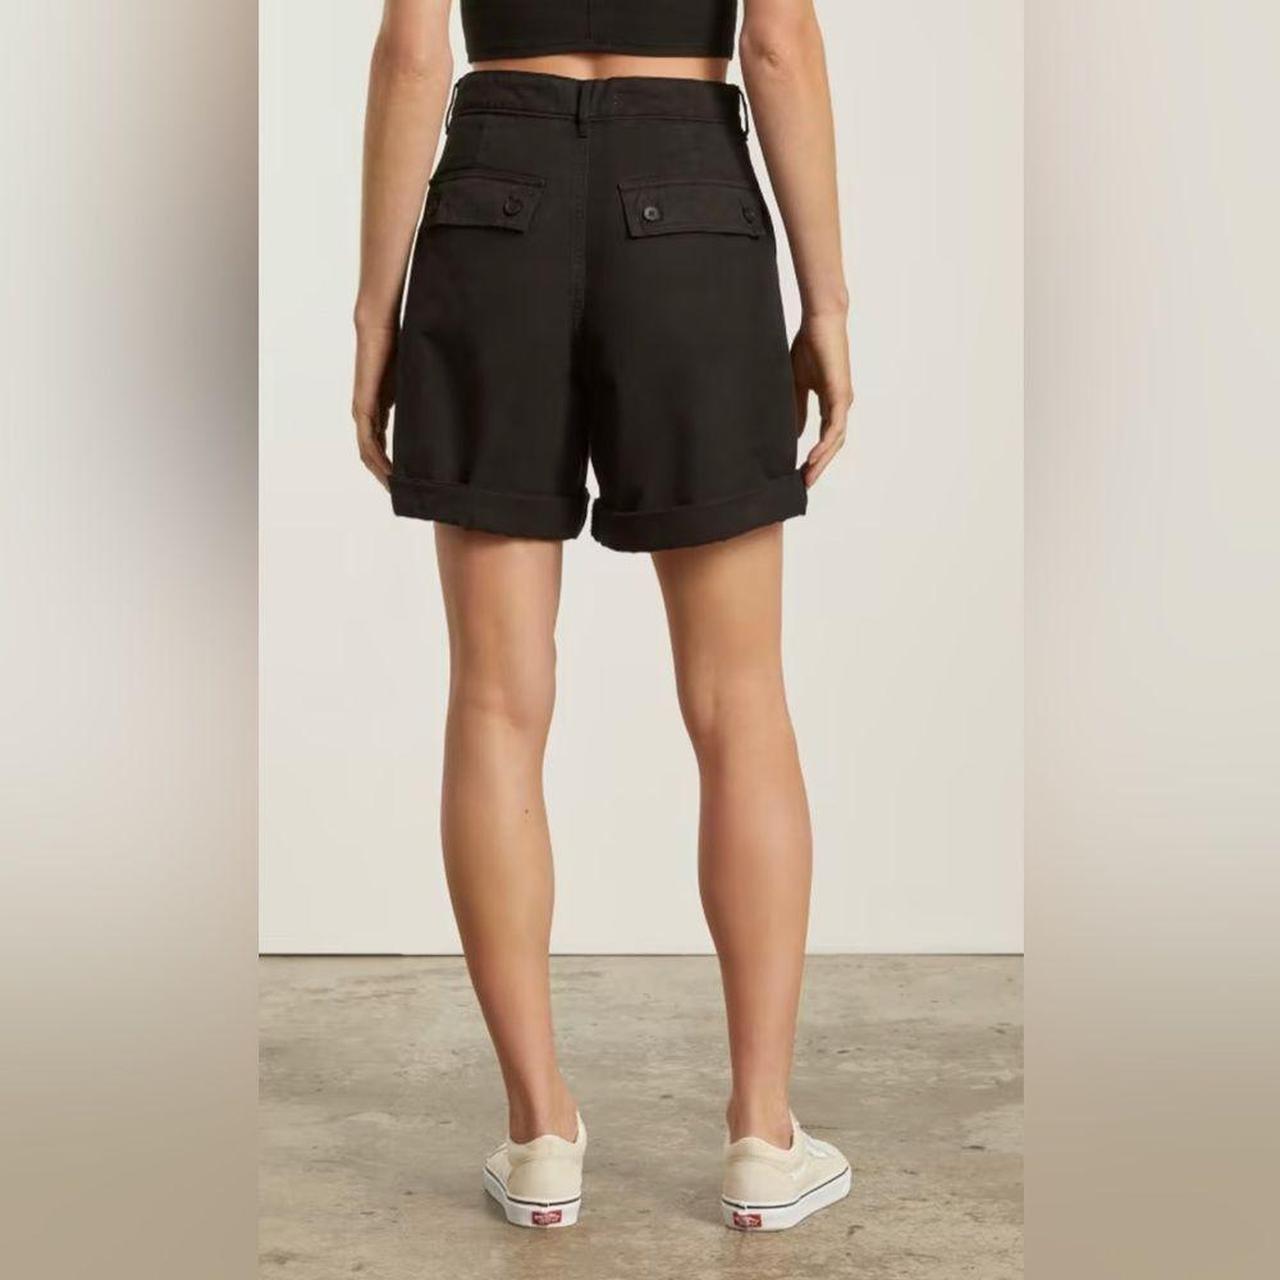 Women's Shorts & Skirts in Black – Everlane